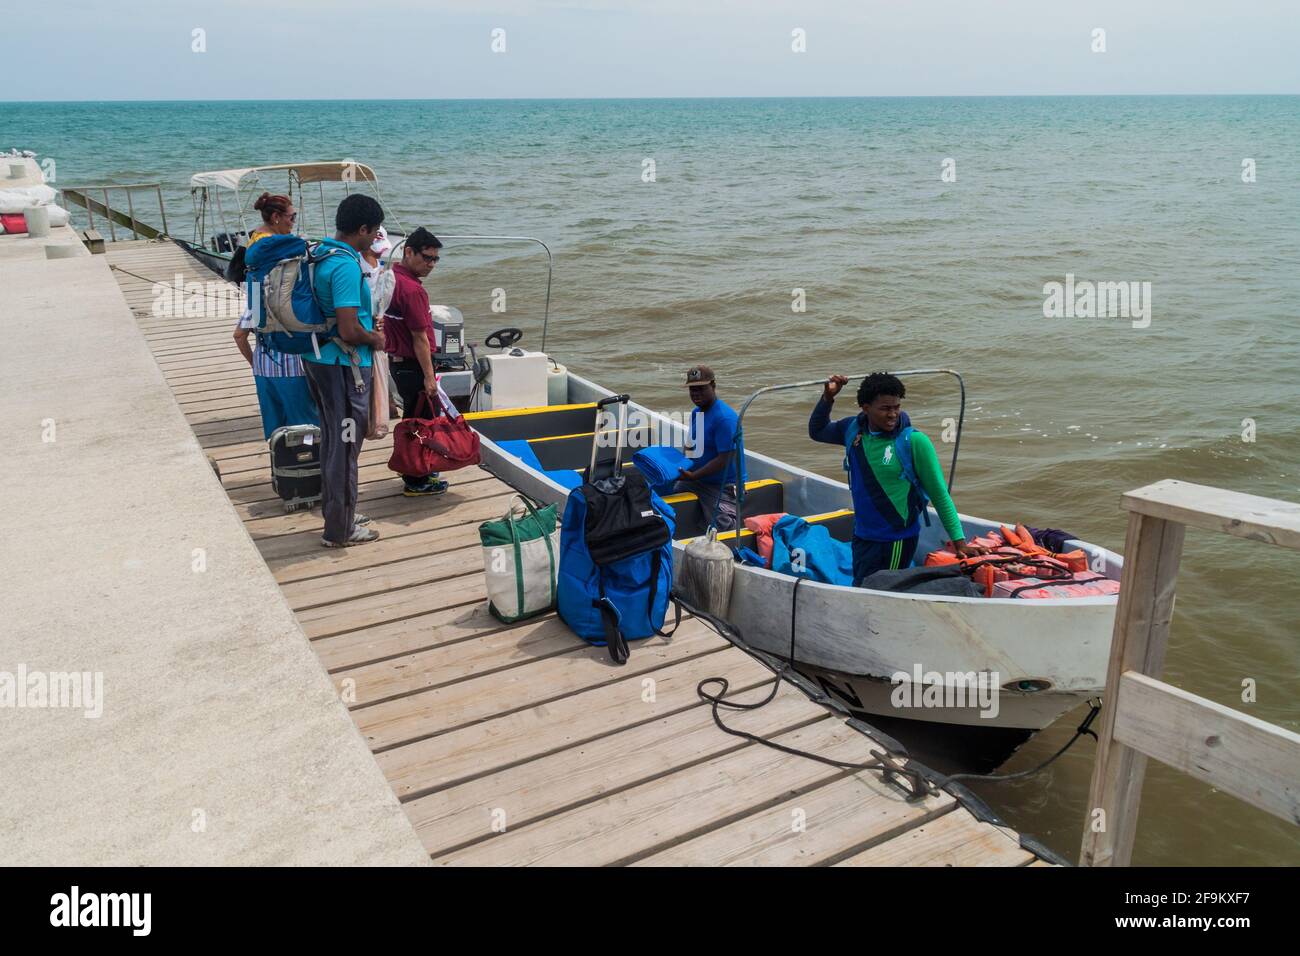 PUNTA GORDA, BELIZE - MARCH 9, 2016: Passengers boarding a boat to Livingston Guatemala in a port of Punta Gorda town, Belize Stock Photo